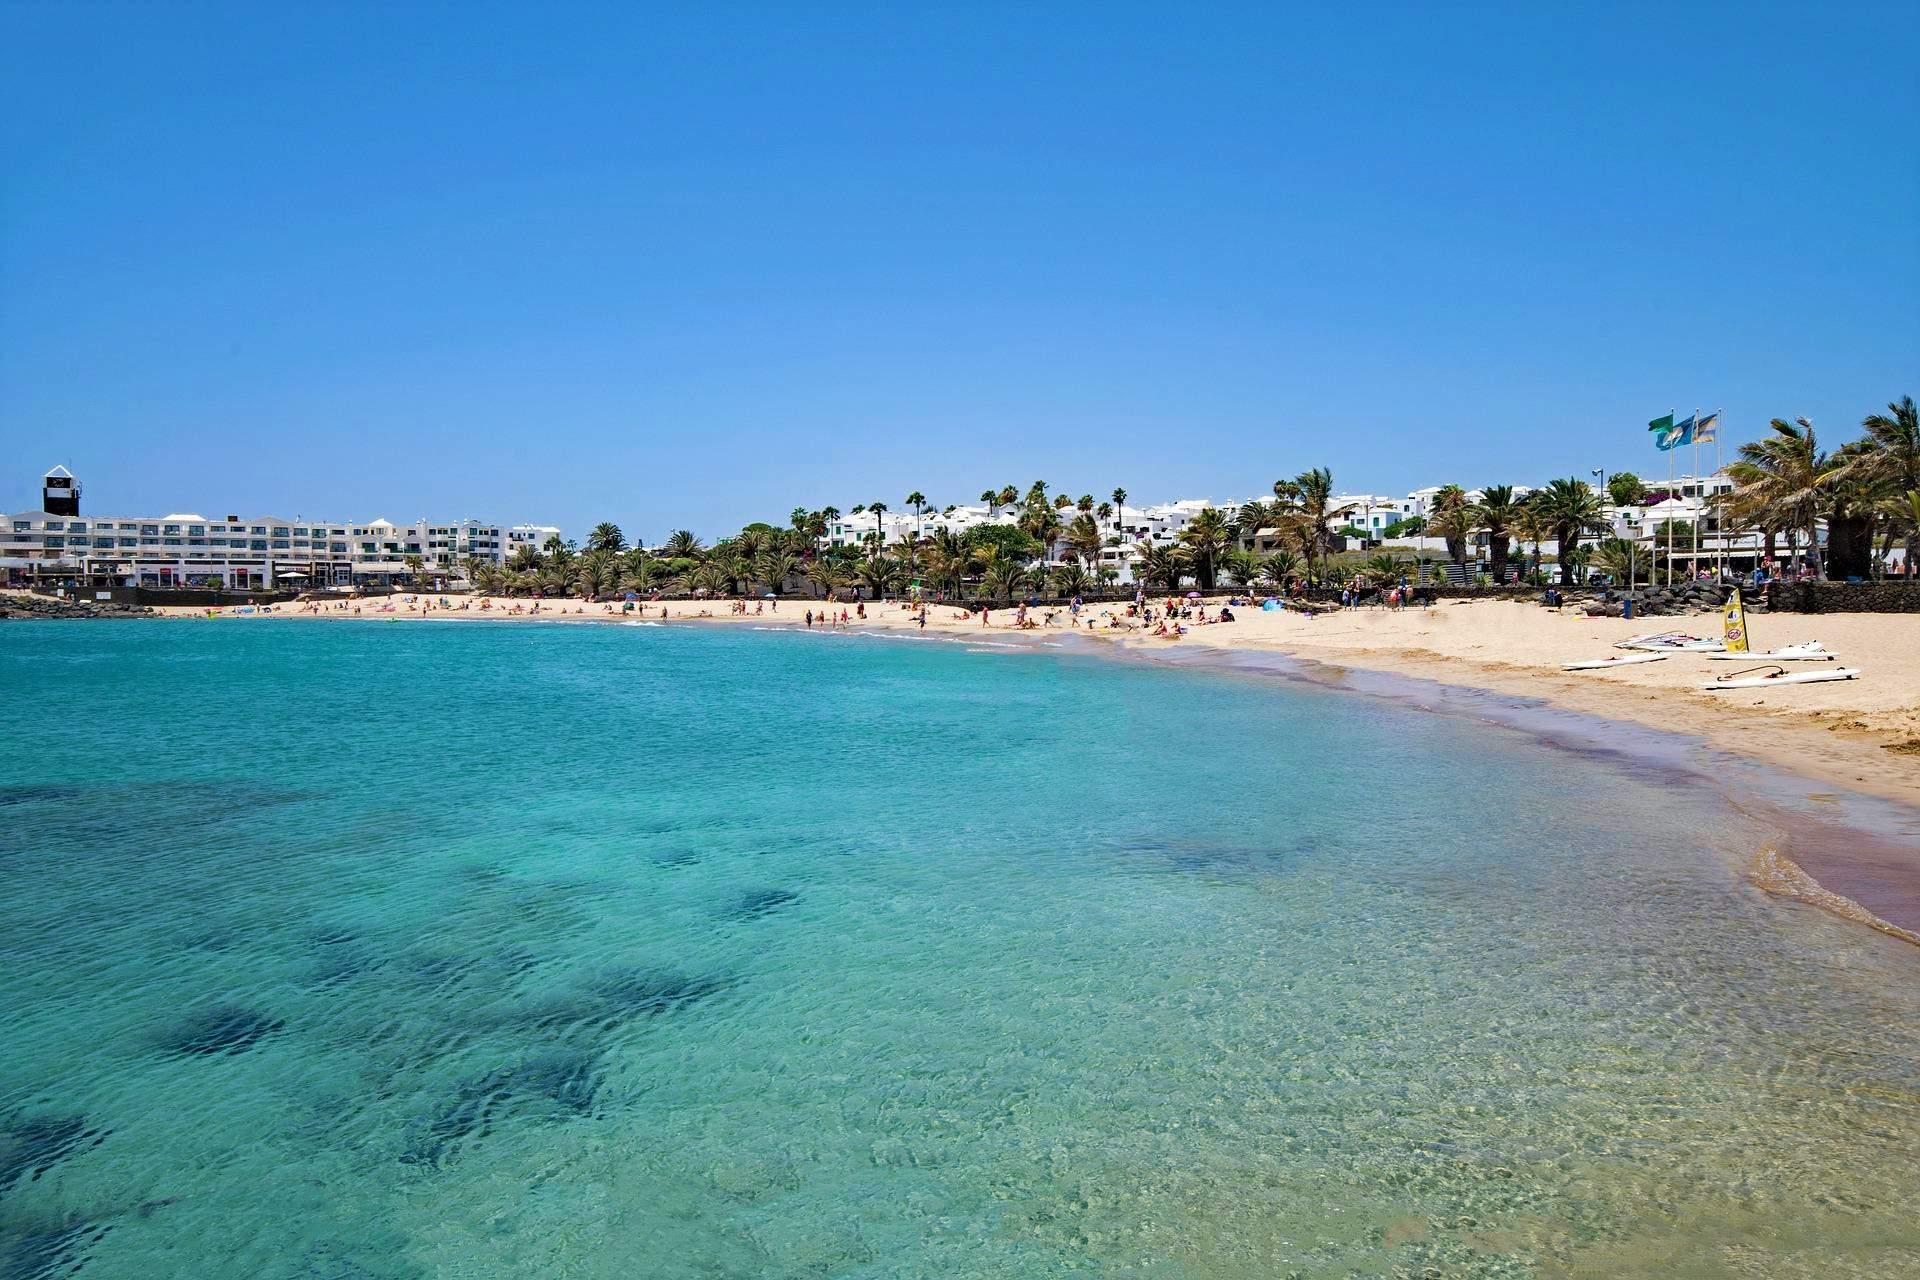 Praias da Costa Teguise em Lanzarote